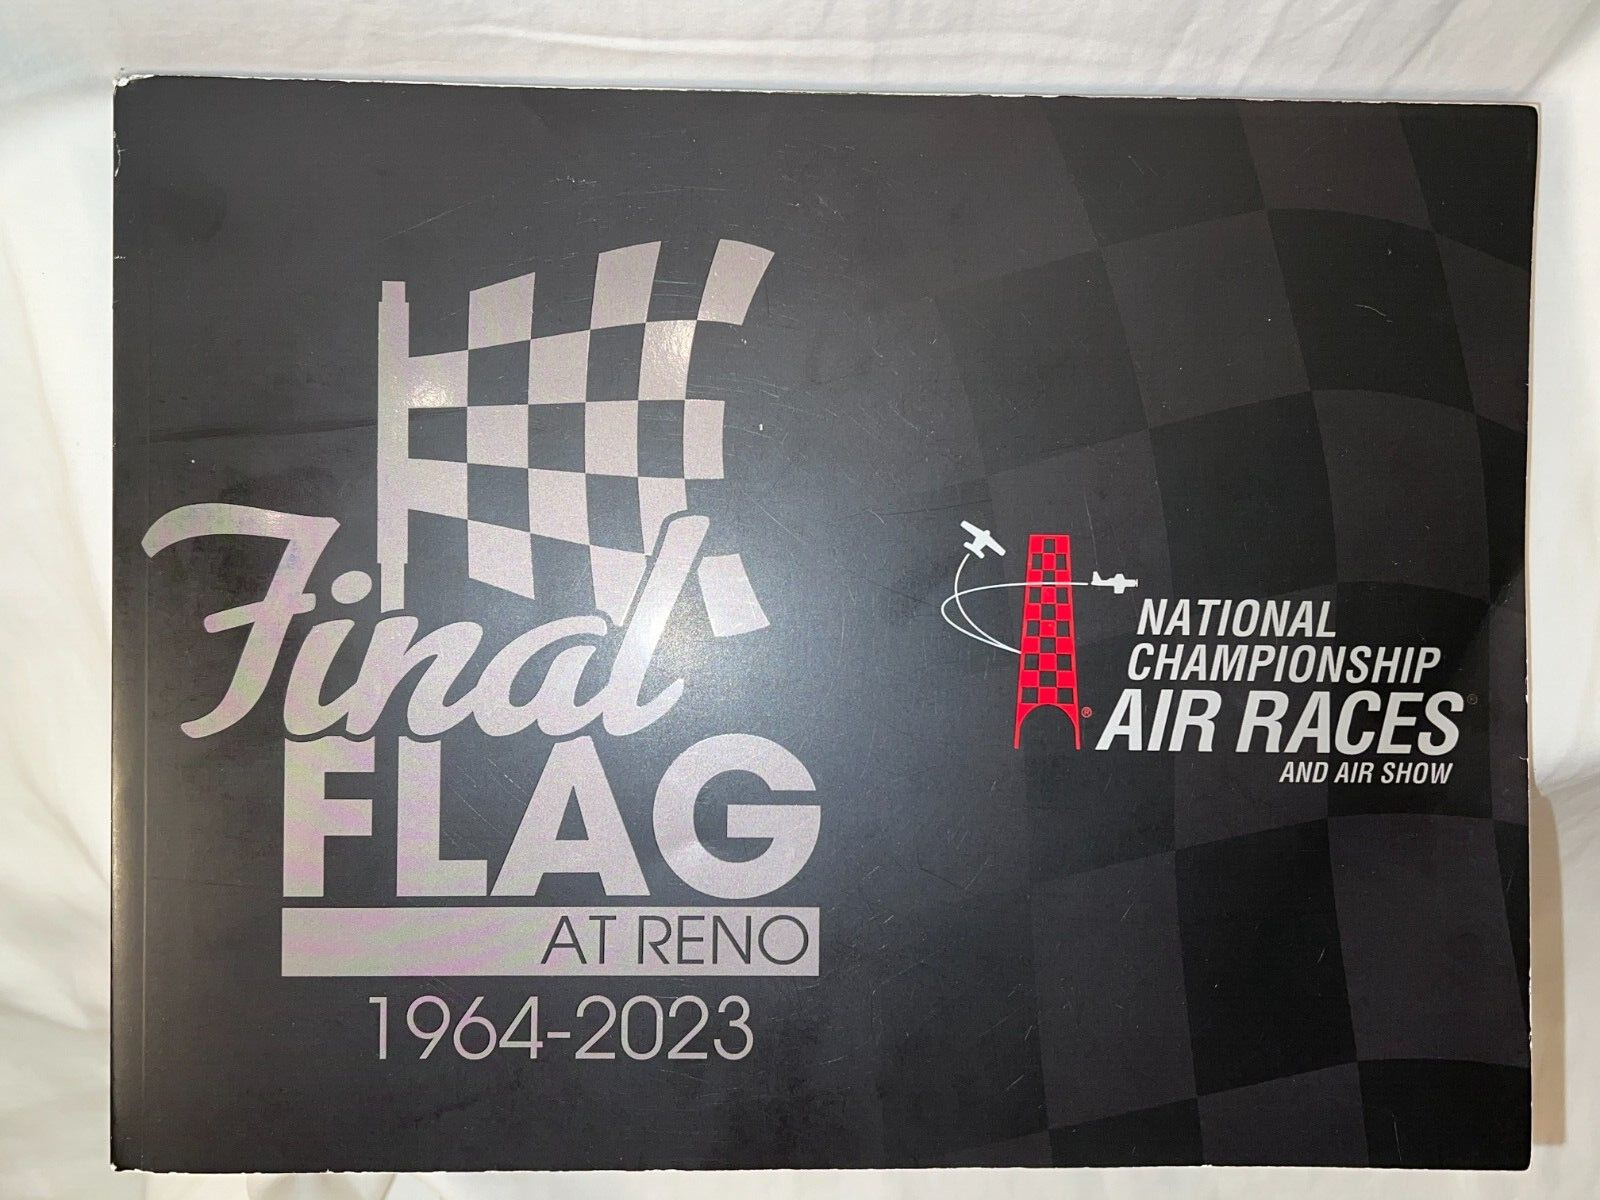 RENO NATIONAL CHAMPIONSHIP AIR RACES SHOW 1964-2023 Final Flag Special Program